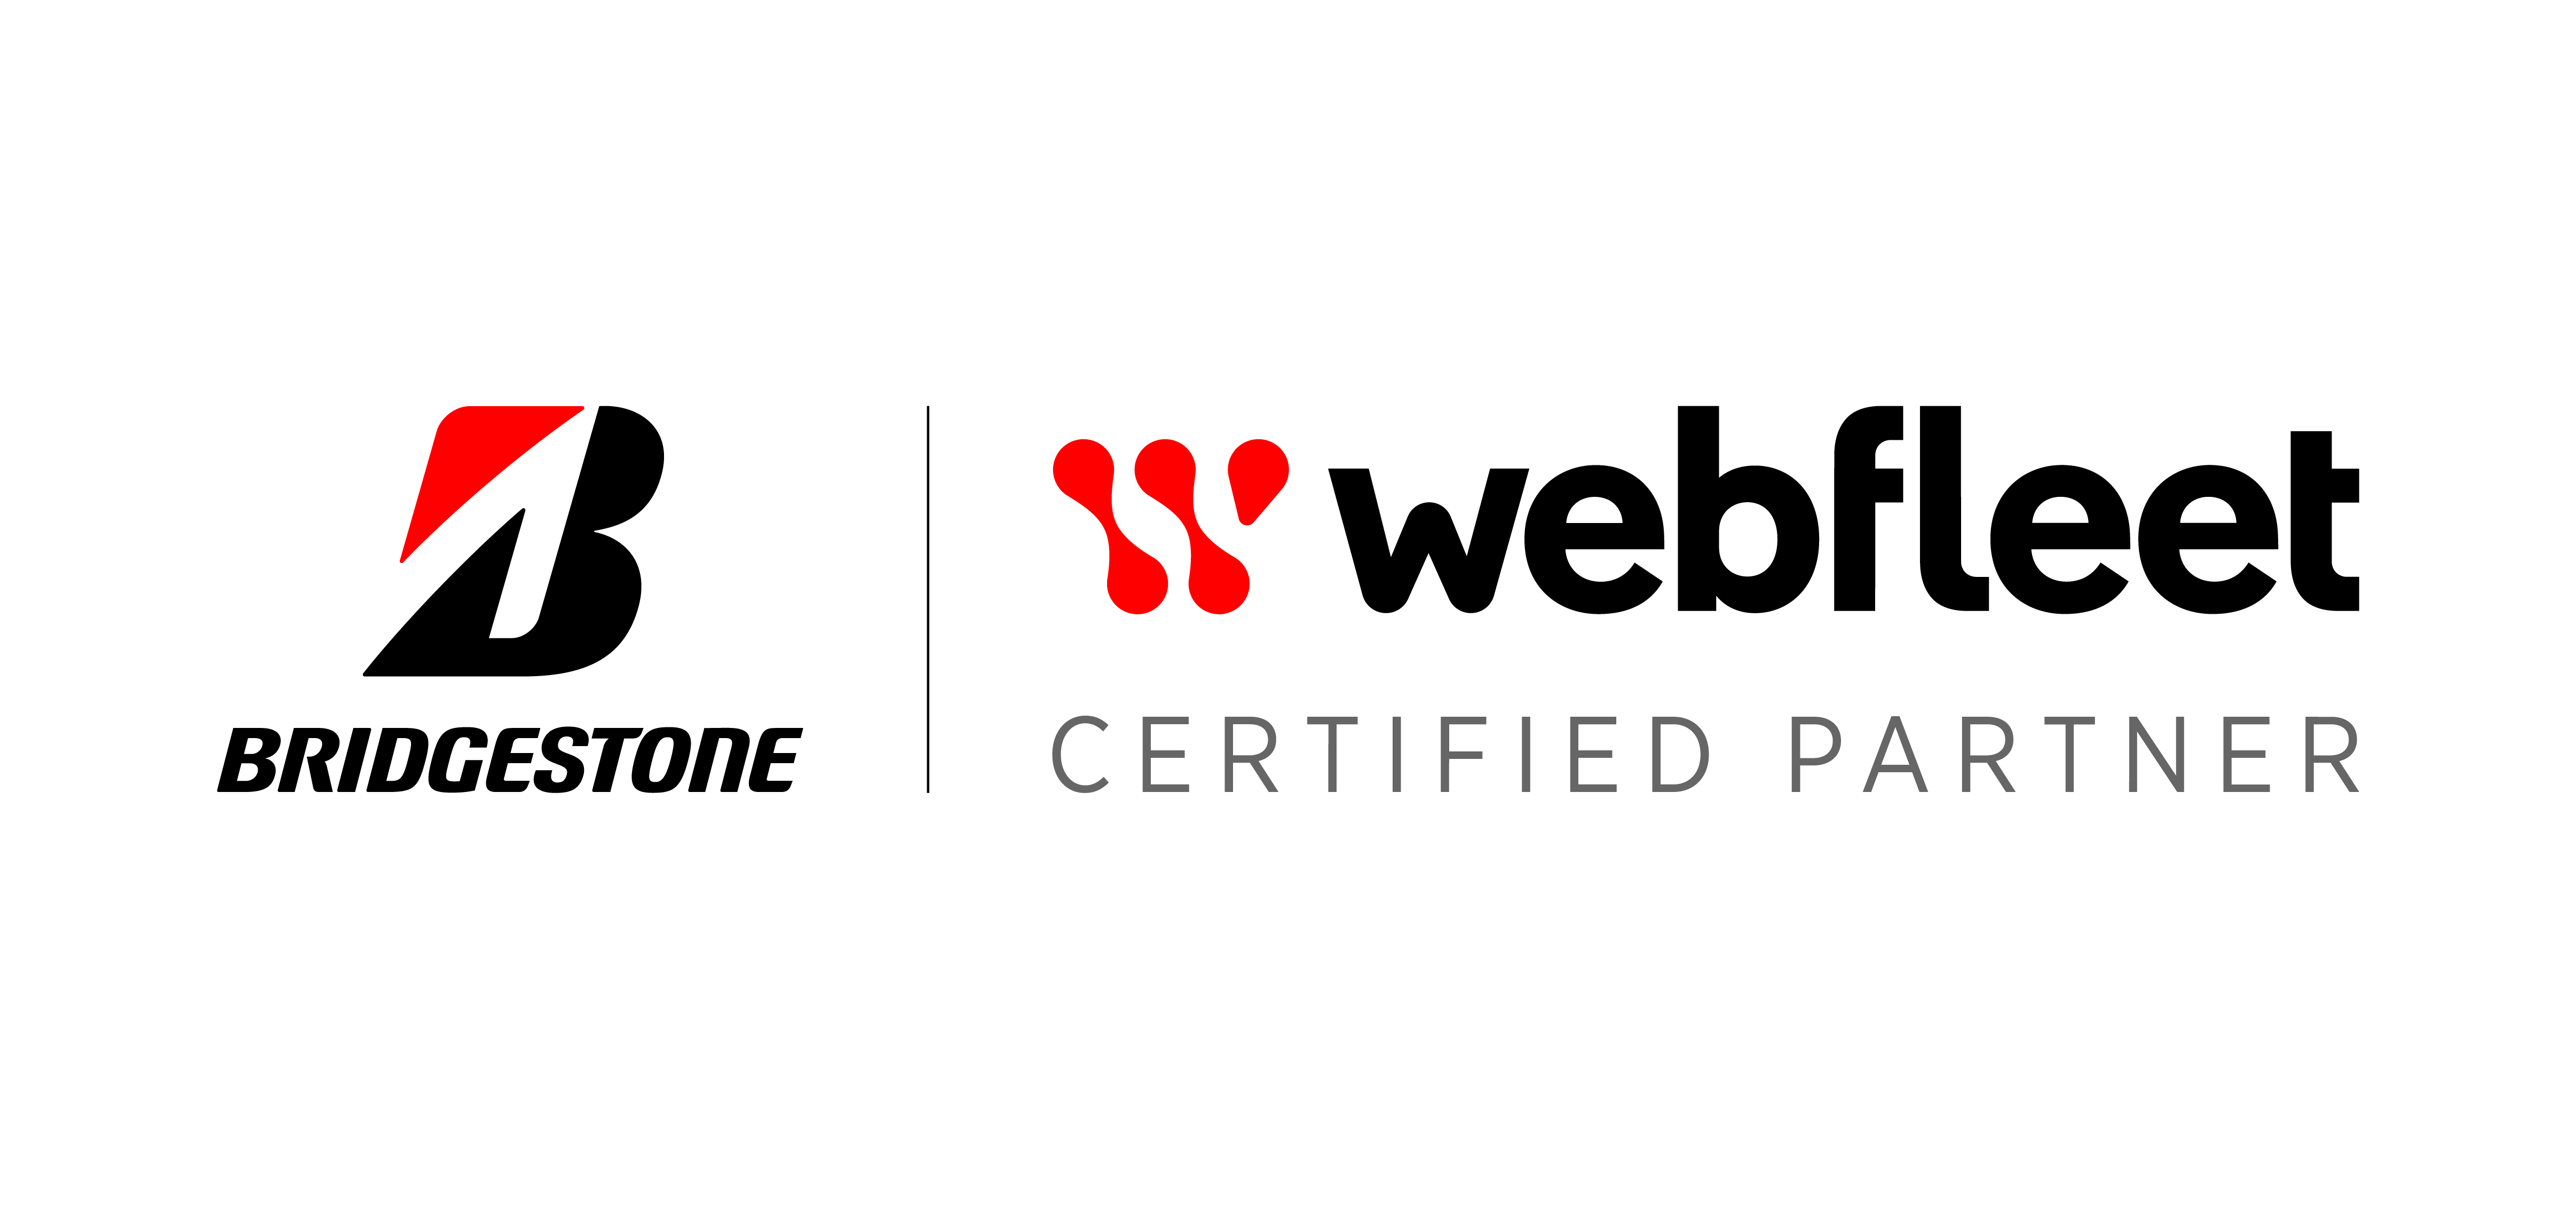 red and black logo saying Bridgestone Webfleet Certified Partners